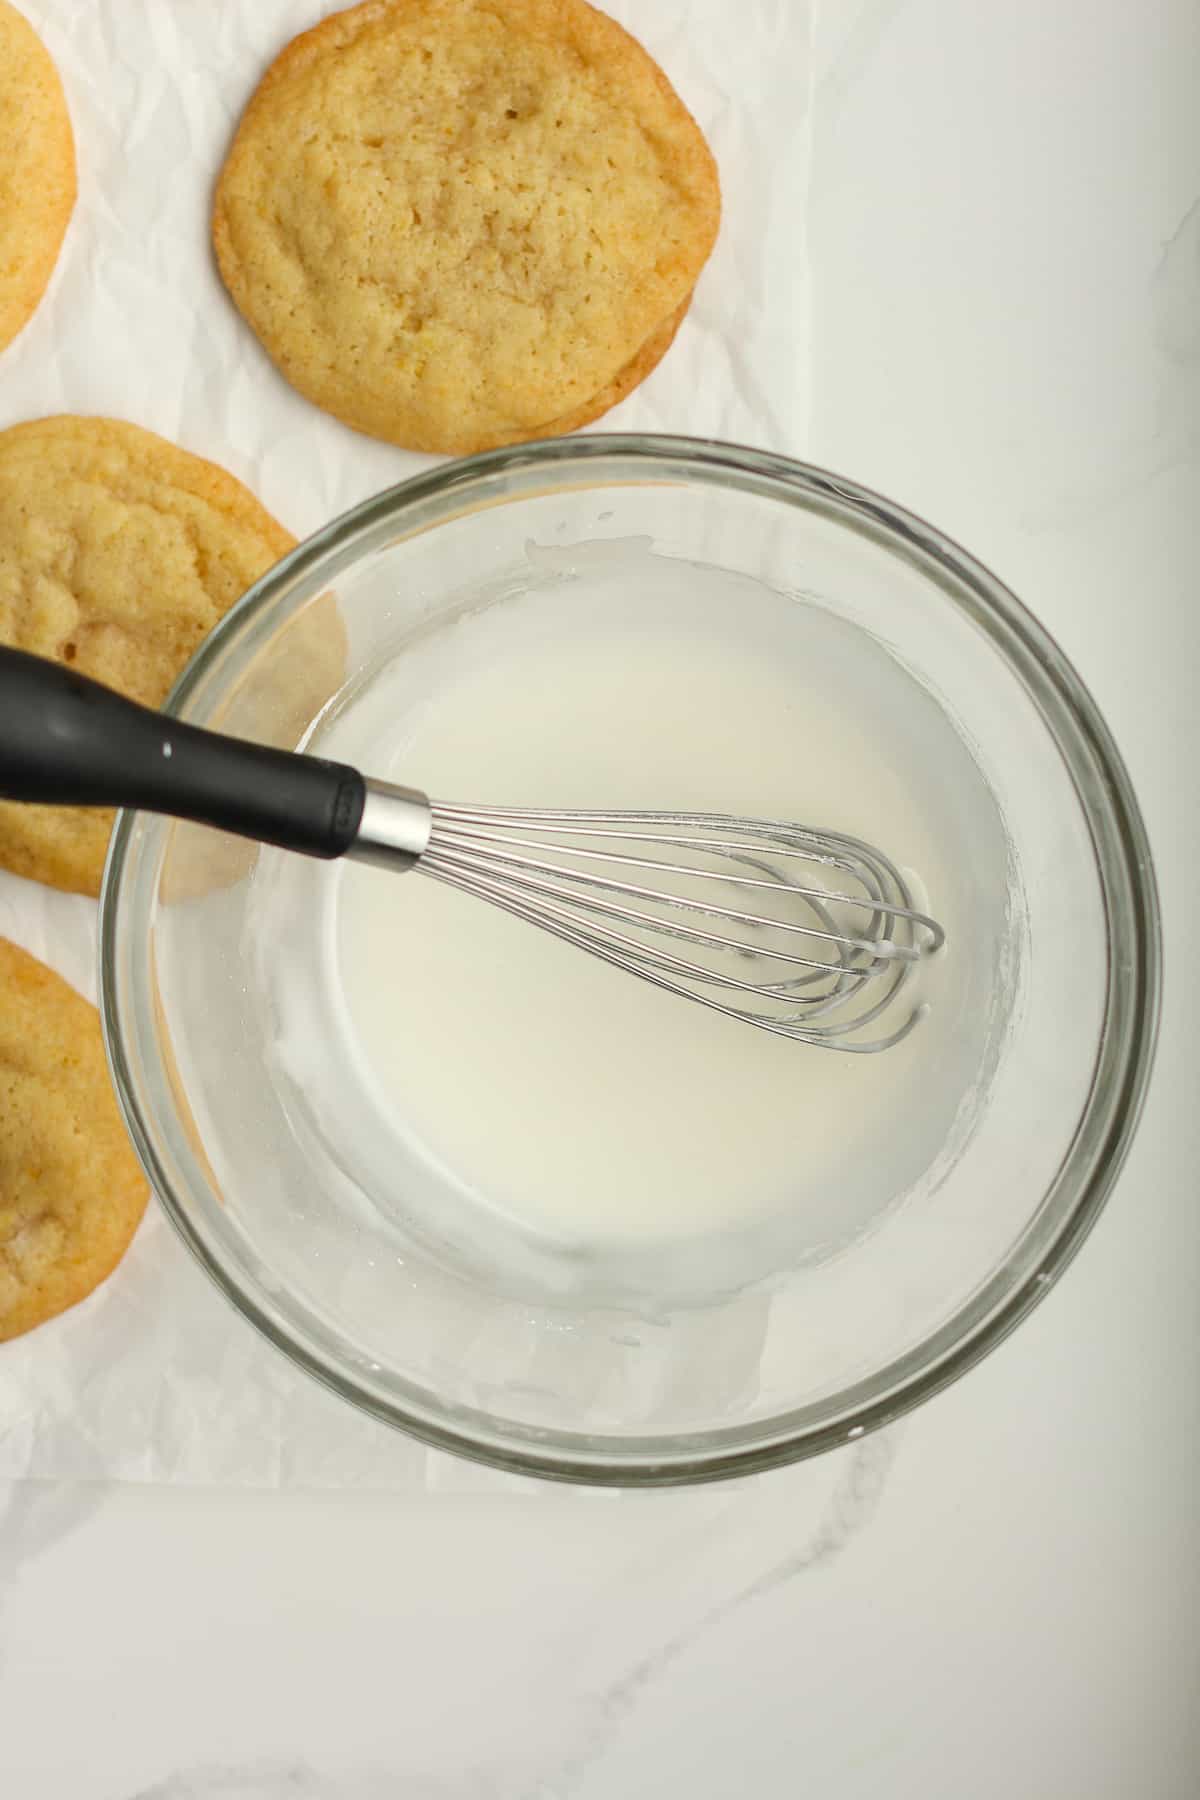 A bowl of glaze next to lemon cookies.